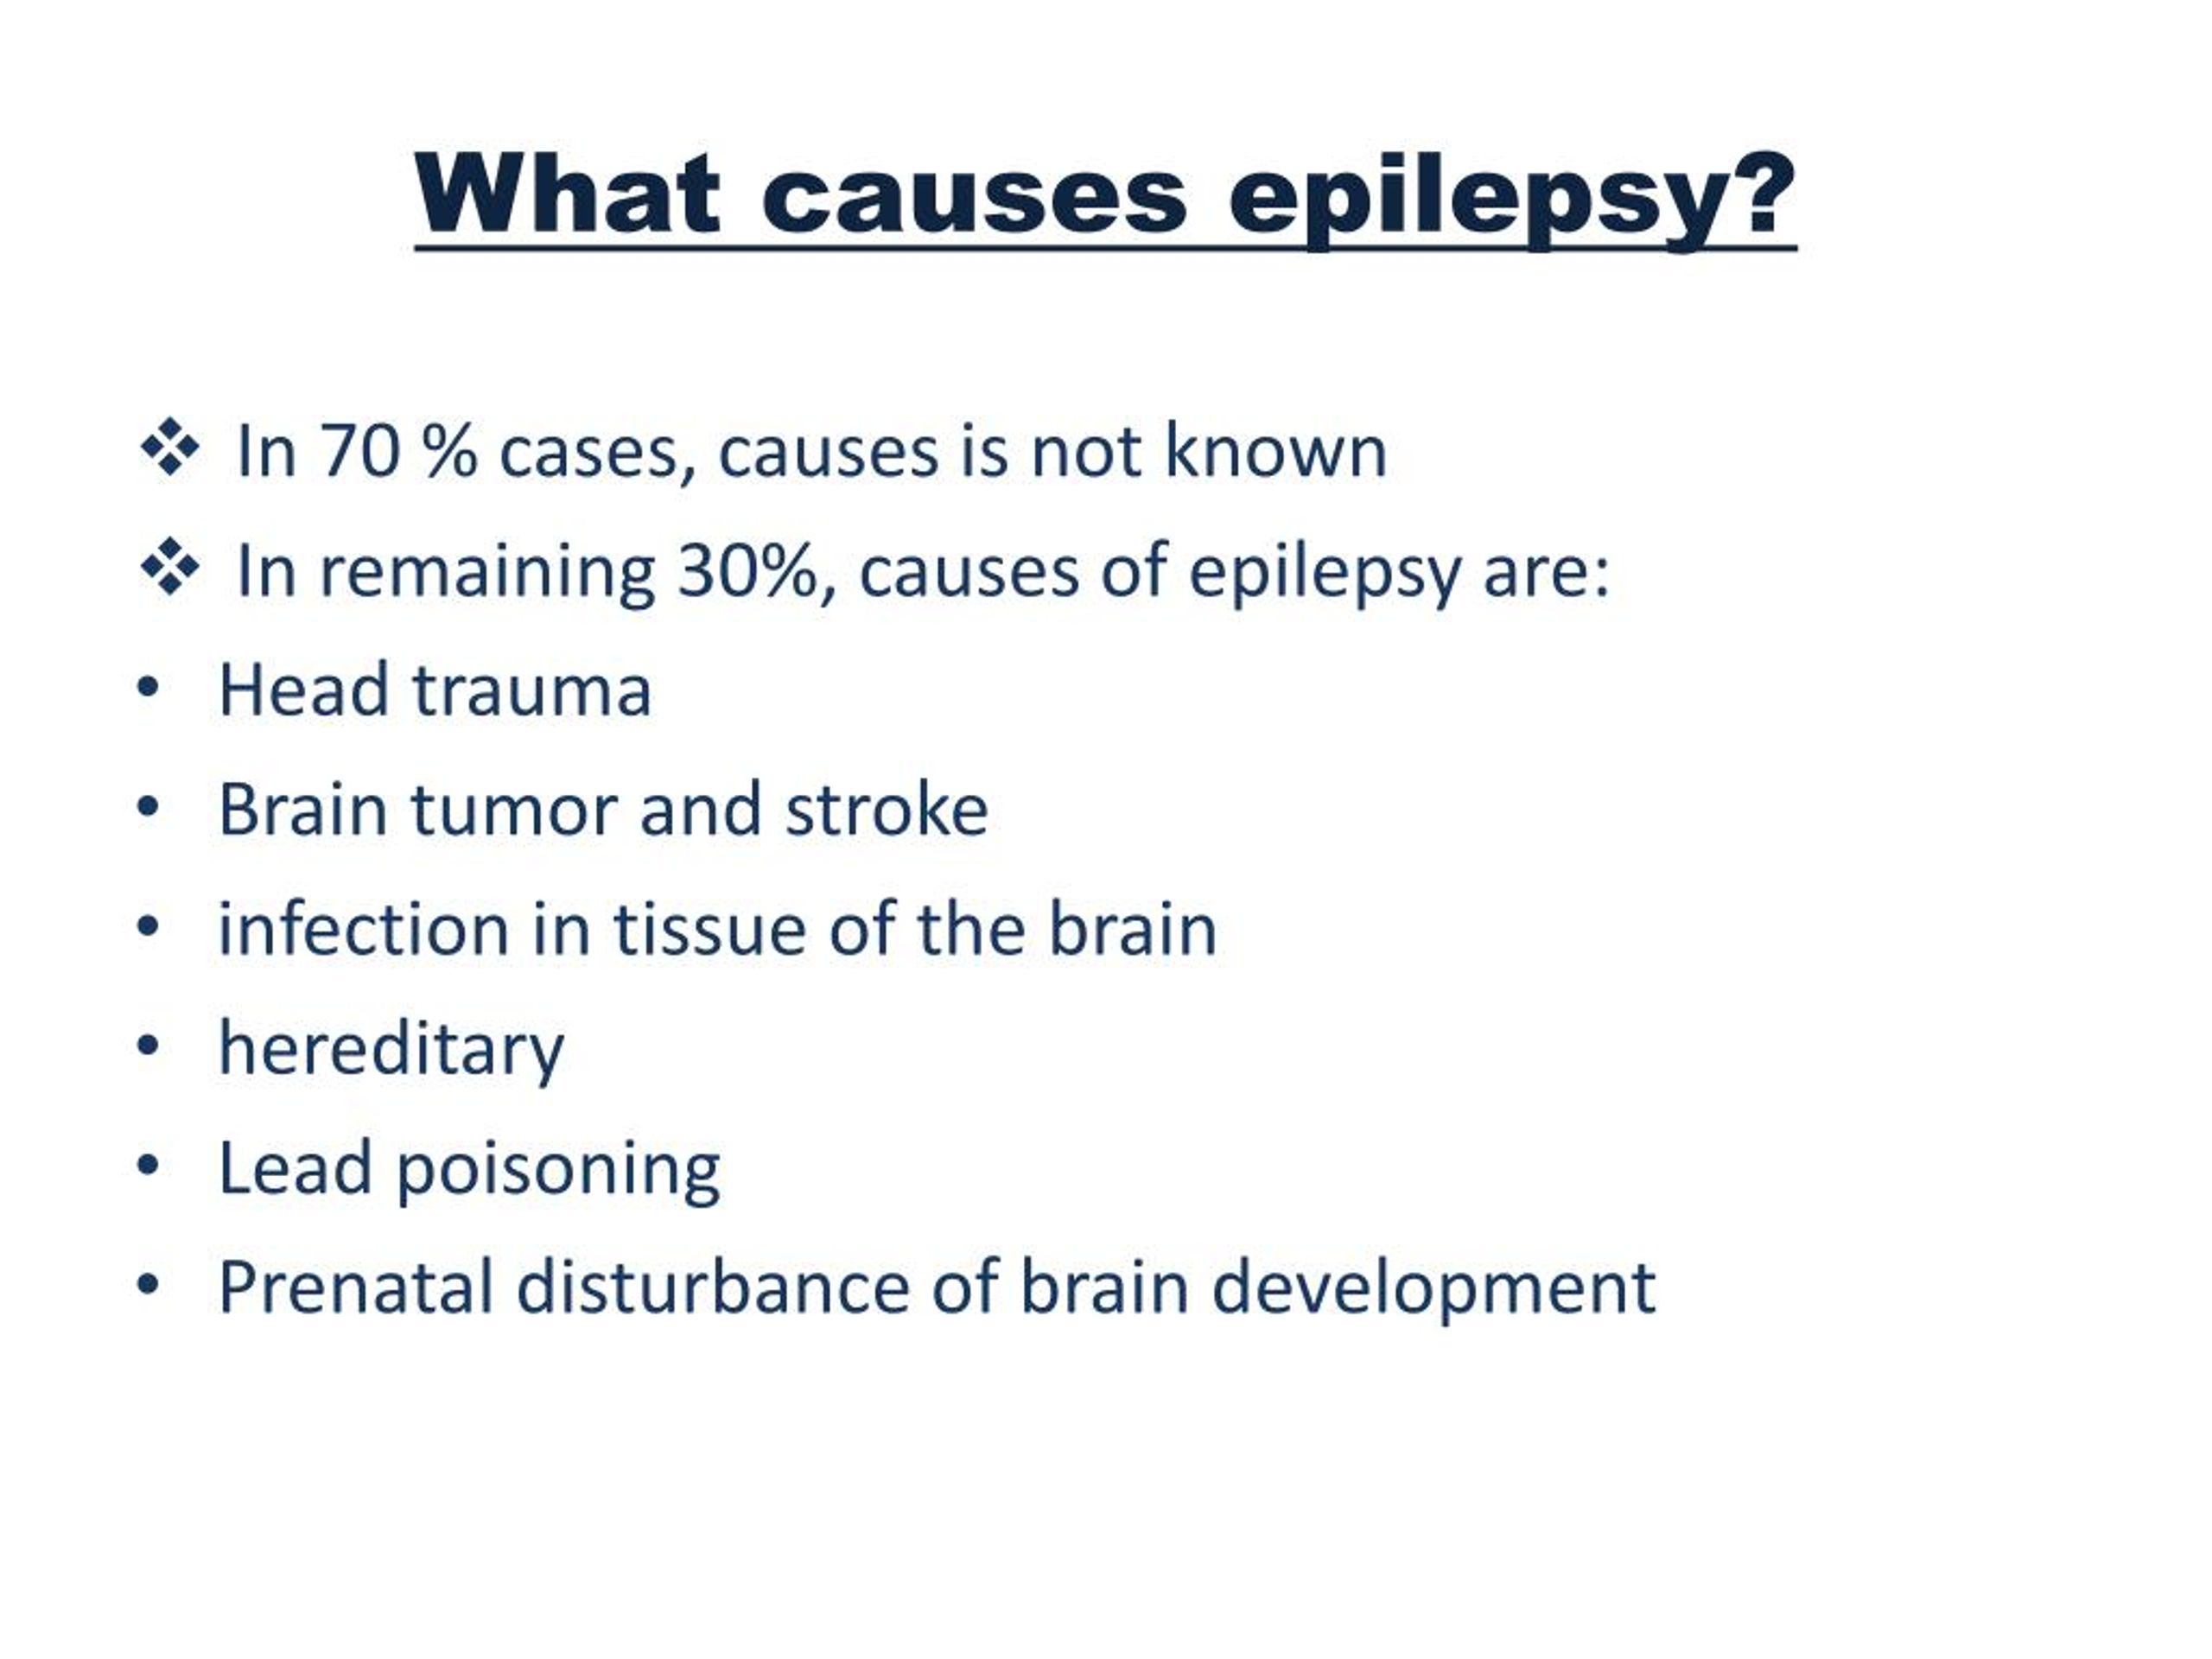 PPT - Epilepsy Specialist Anchorage - aknc PowerPoint Presentation ...